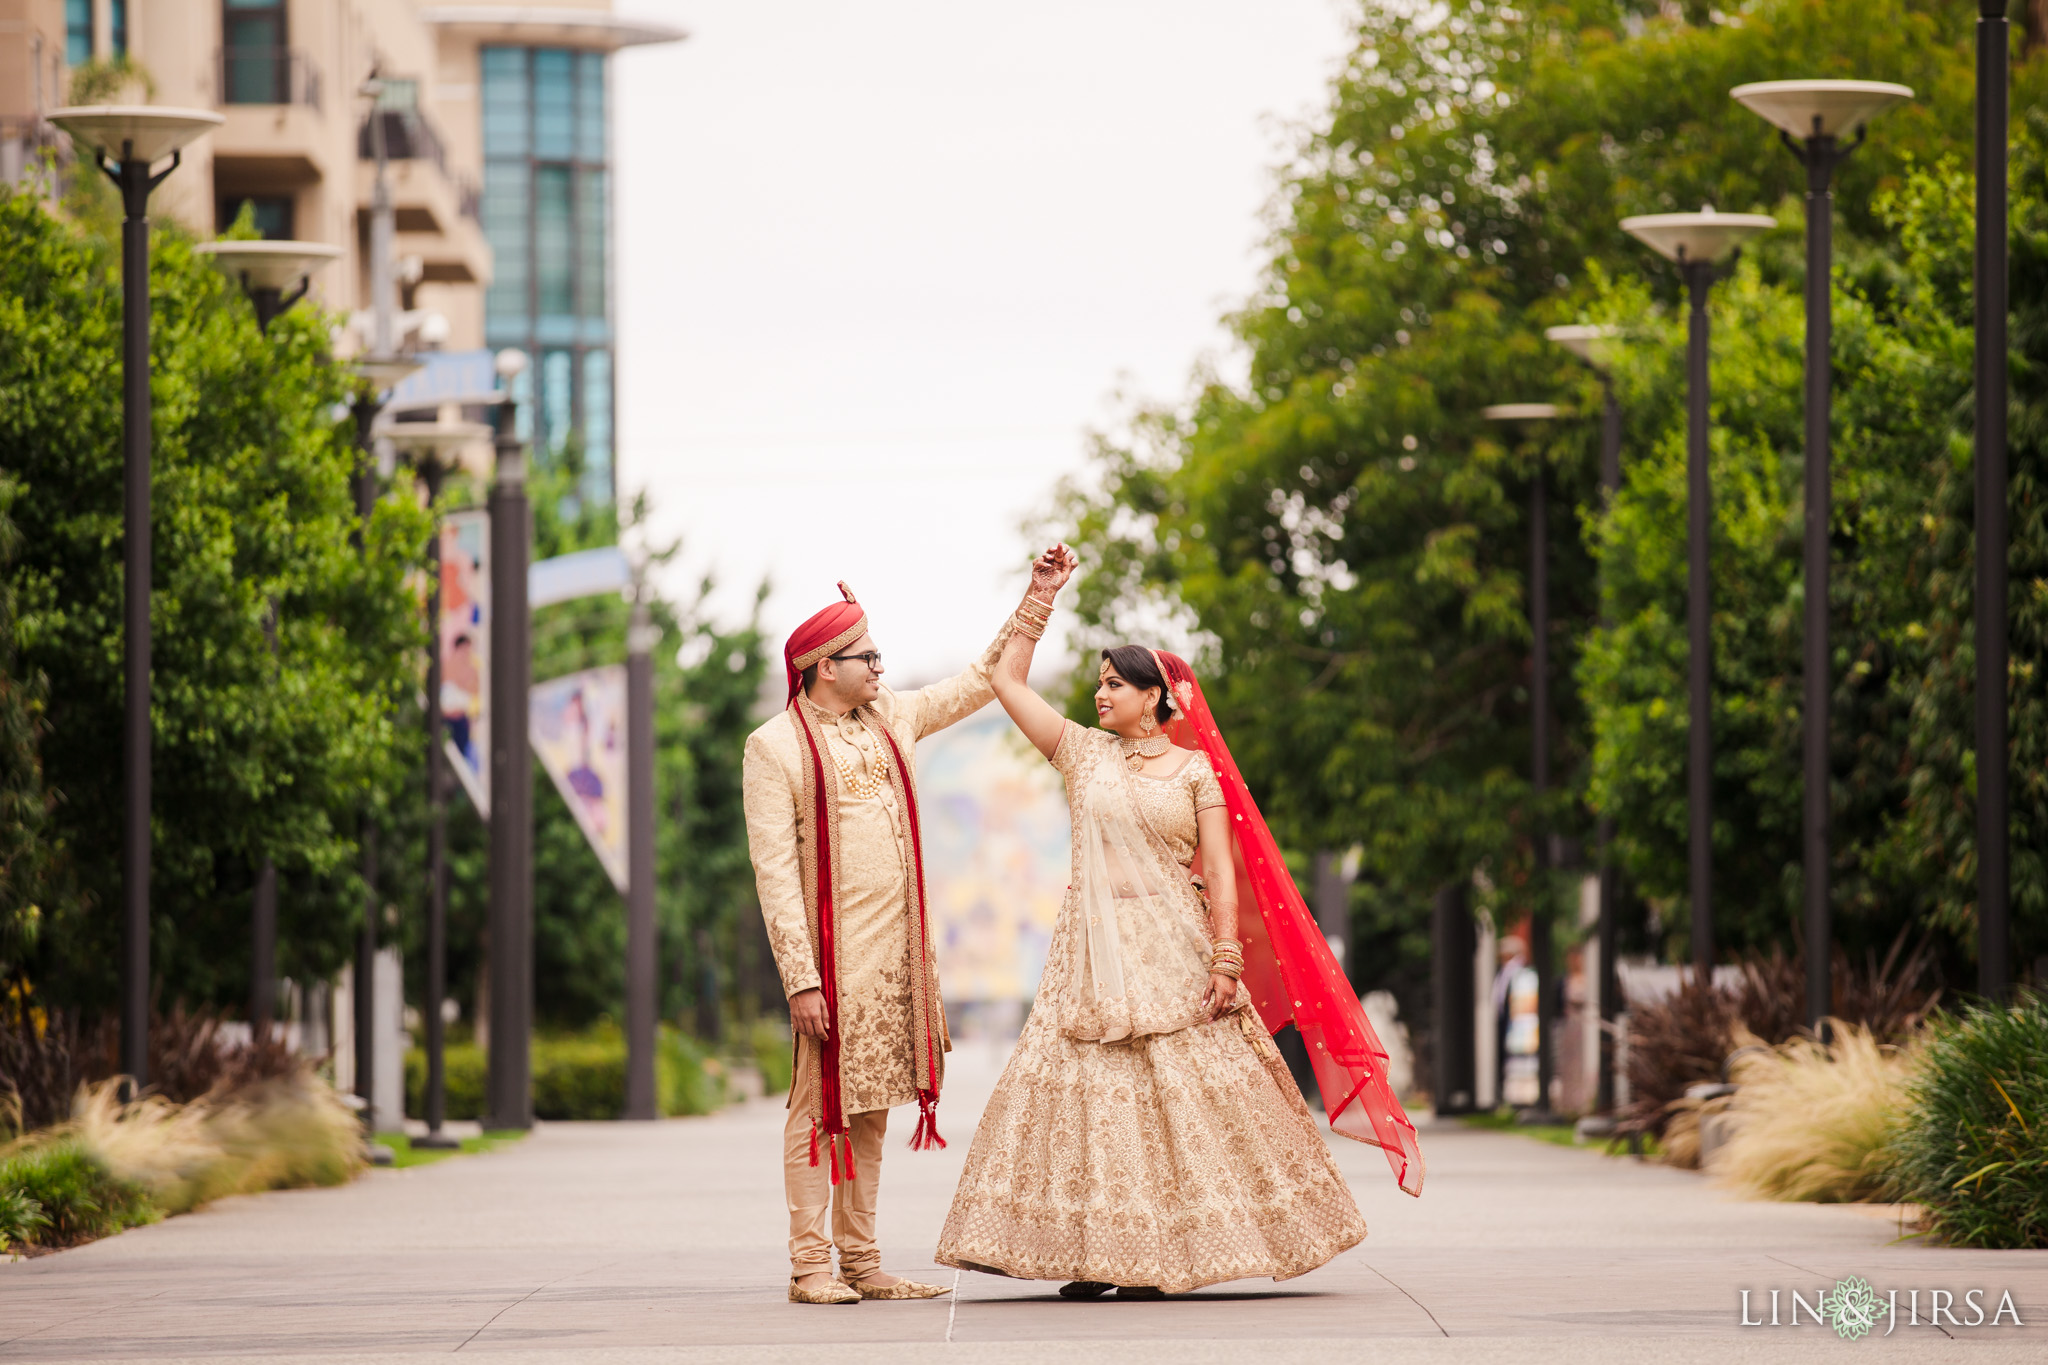 020 Long Beach Performing Arts Center Indian Wedding Photographer